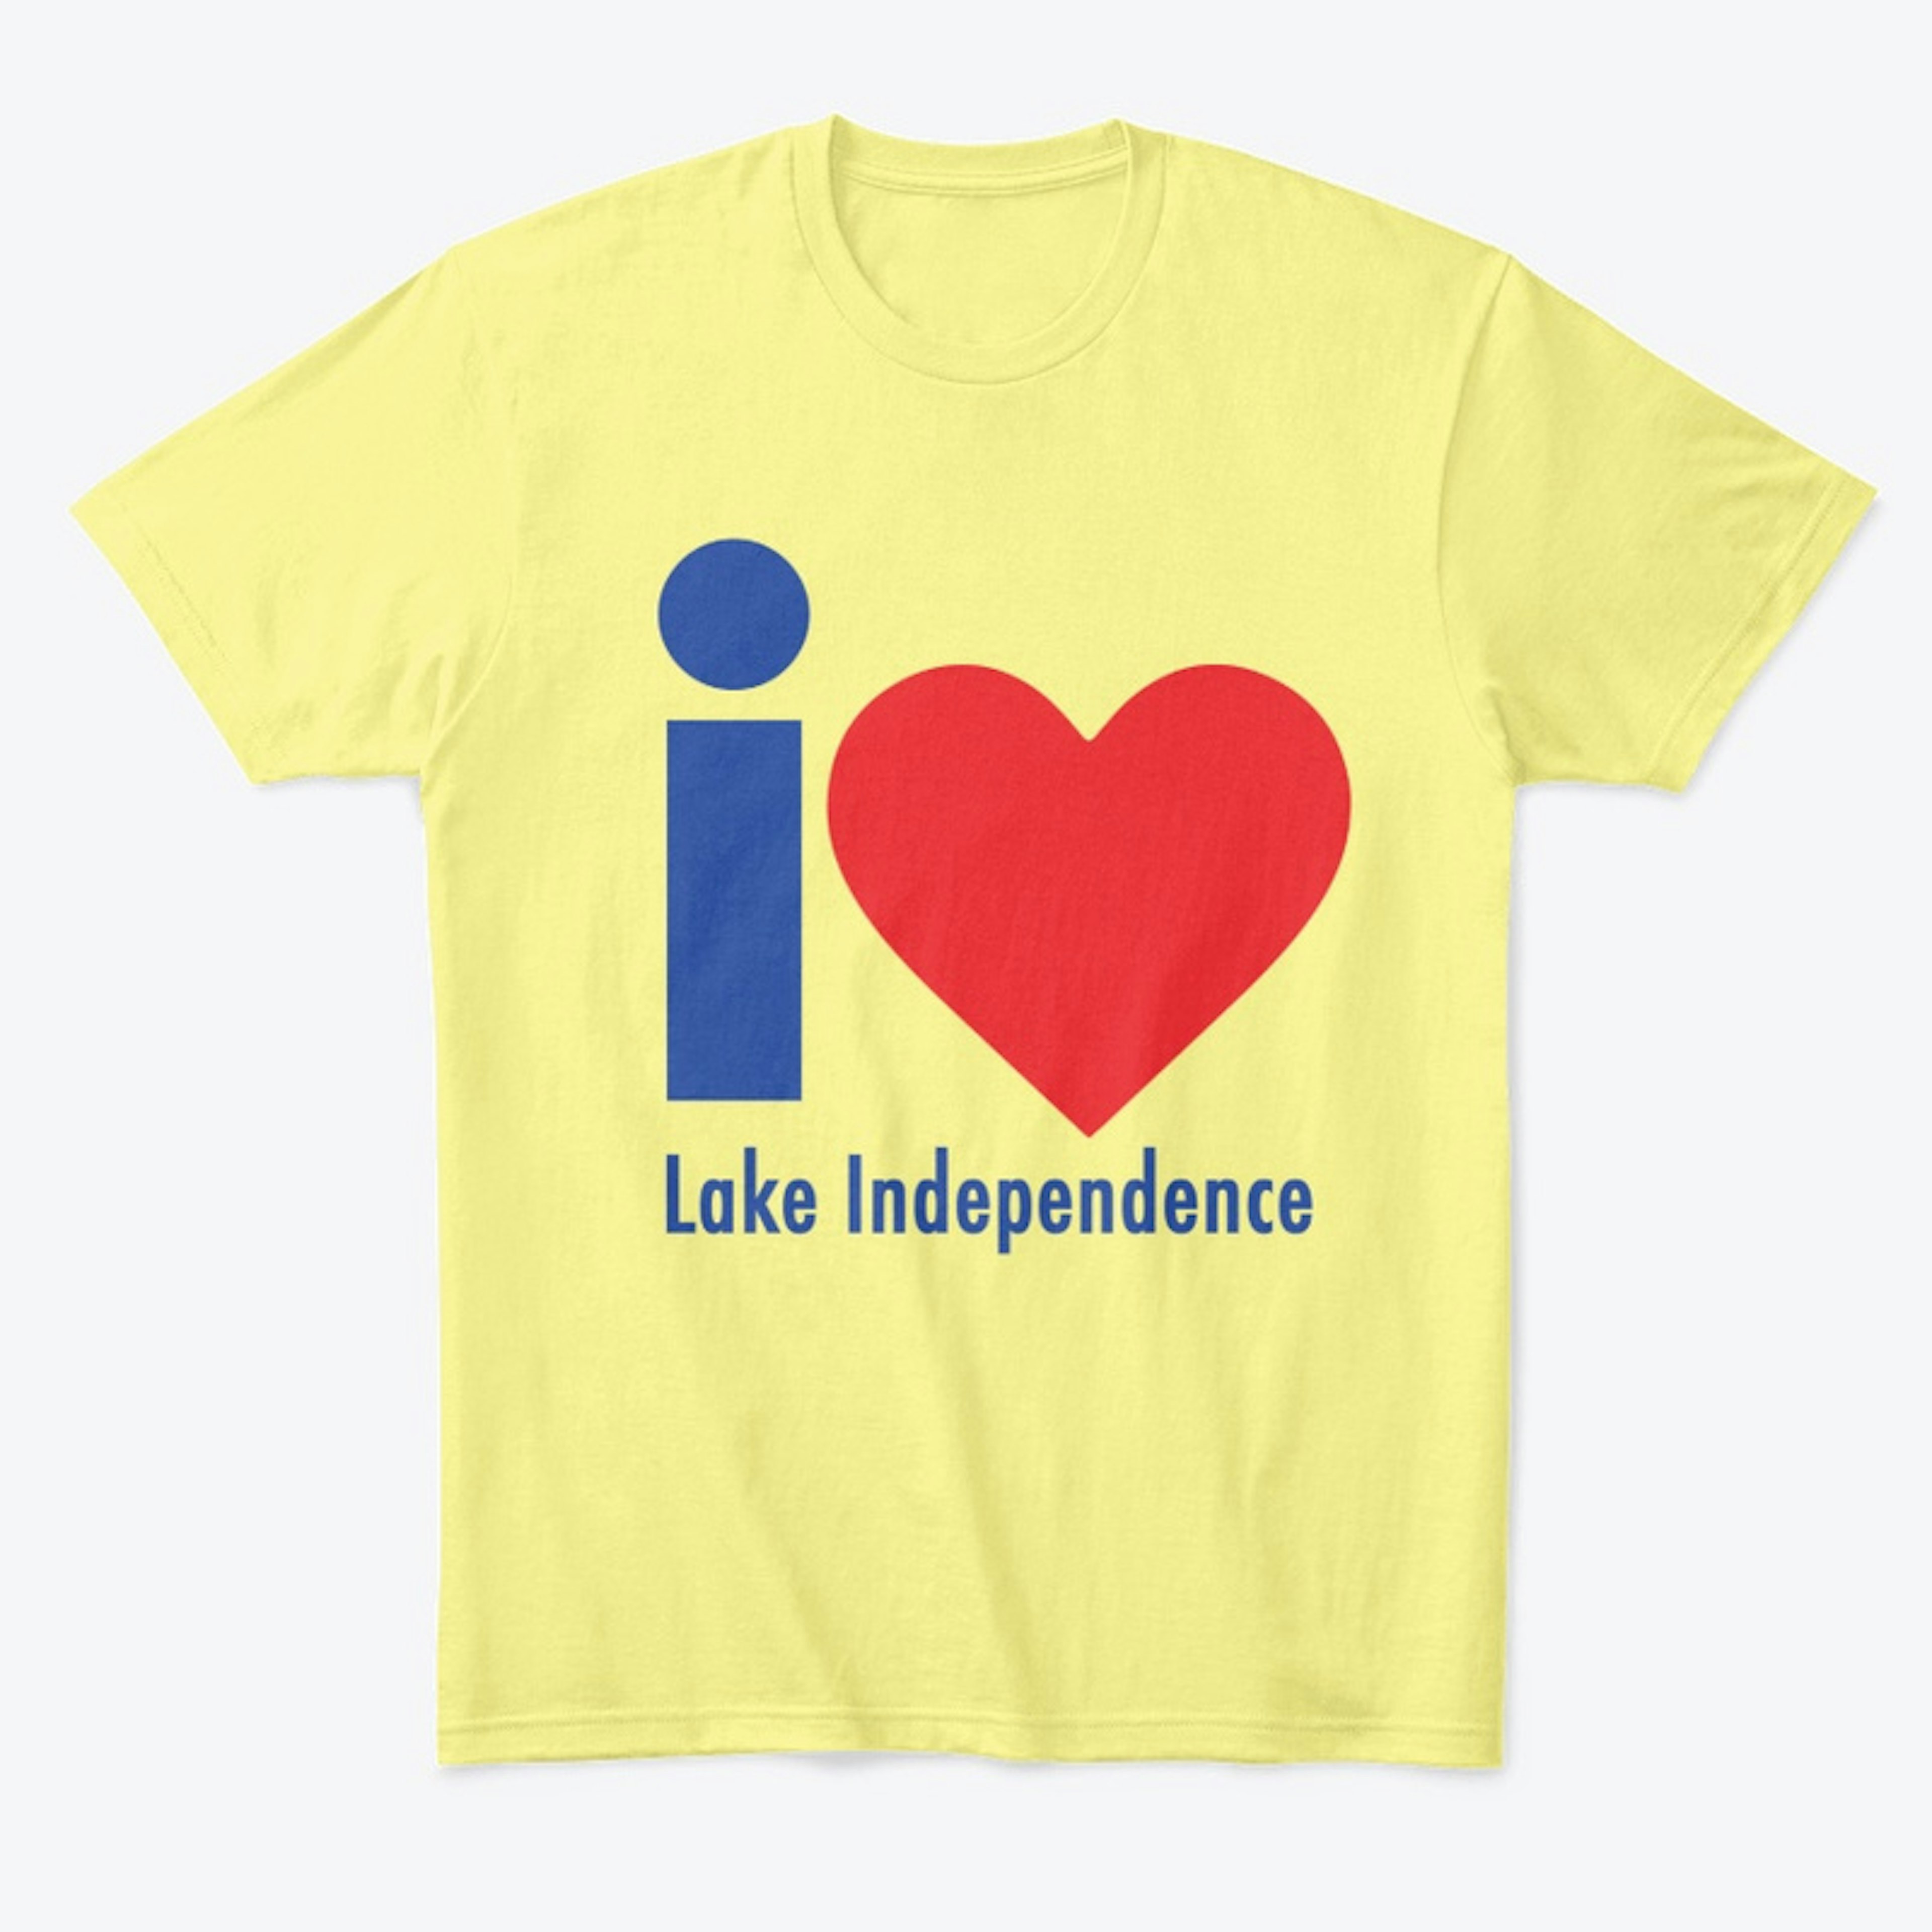 I Heart Lake Independence Tee